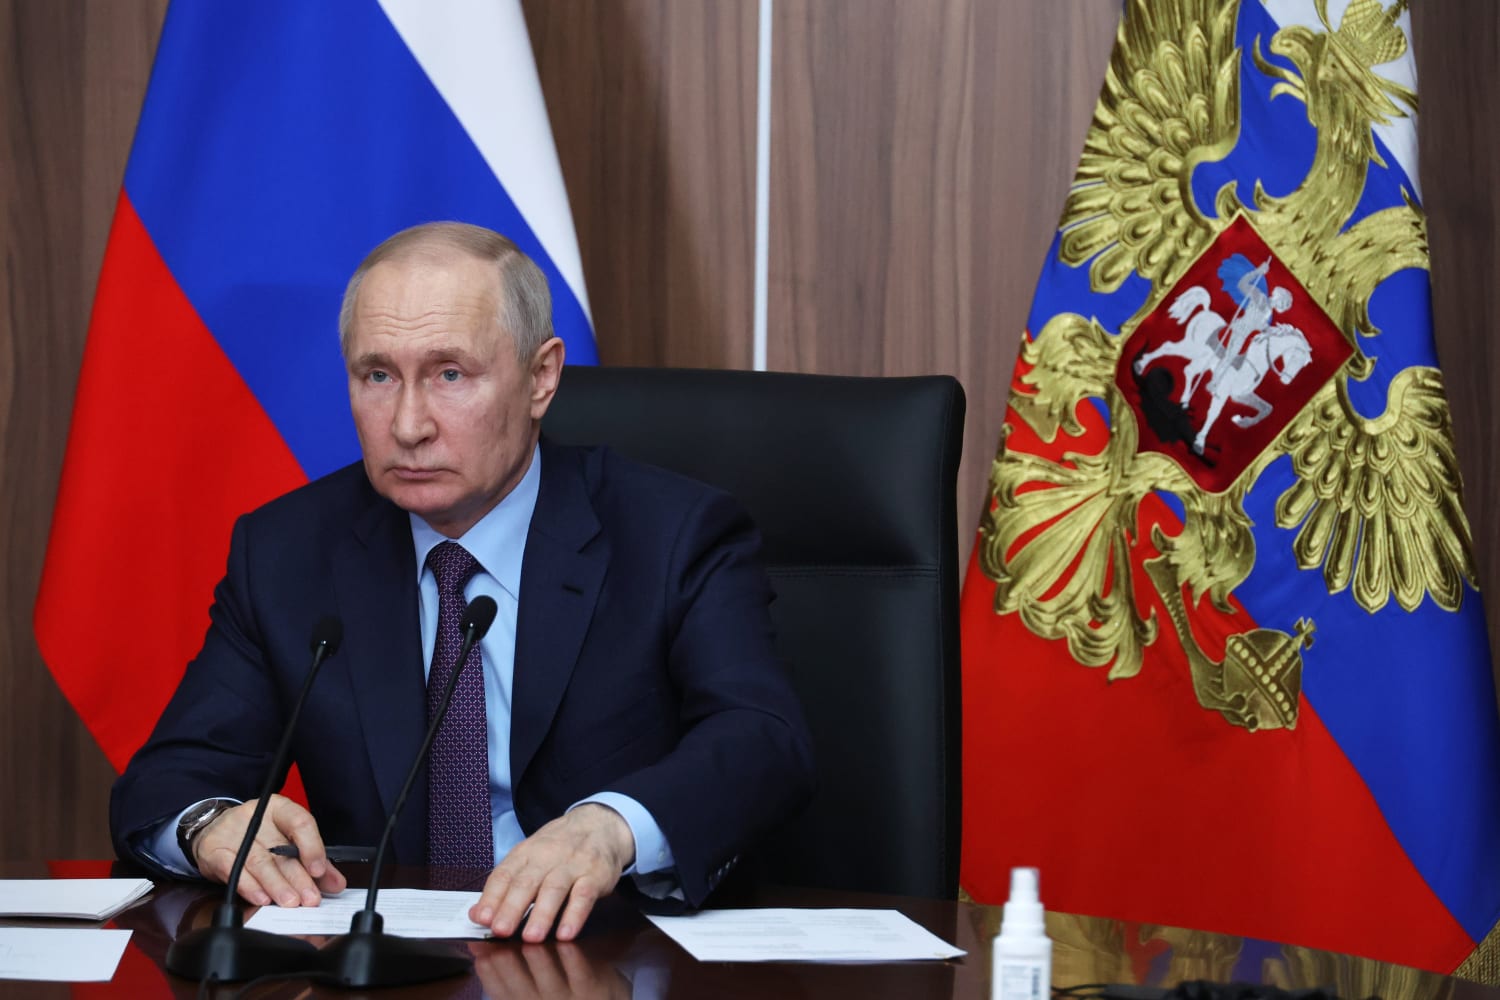 Russia claims Ukraine tried to assassinate Putin in Kremlin drone attack